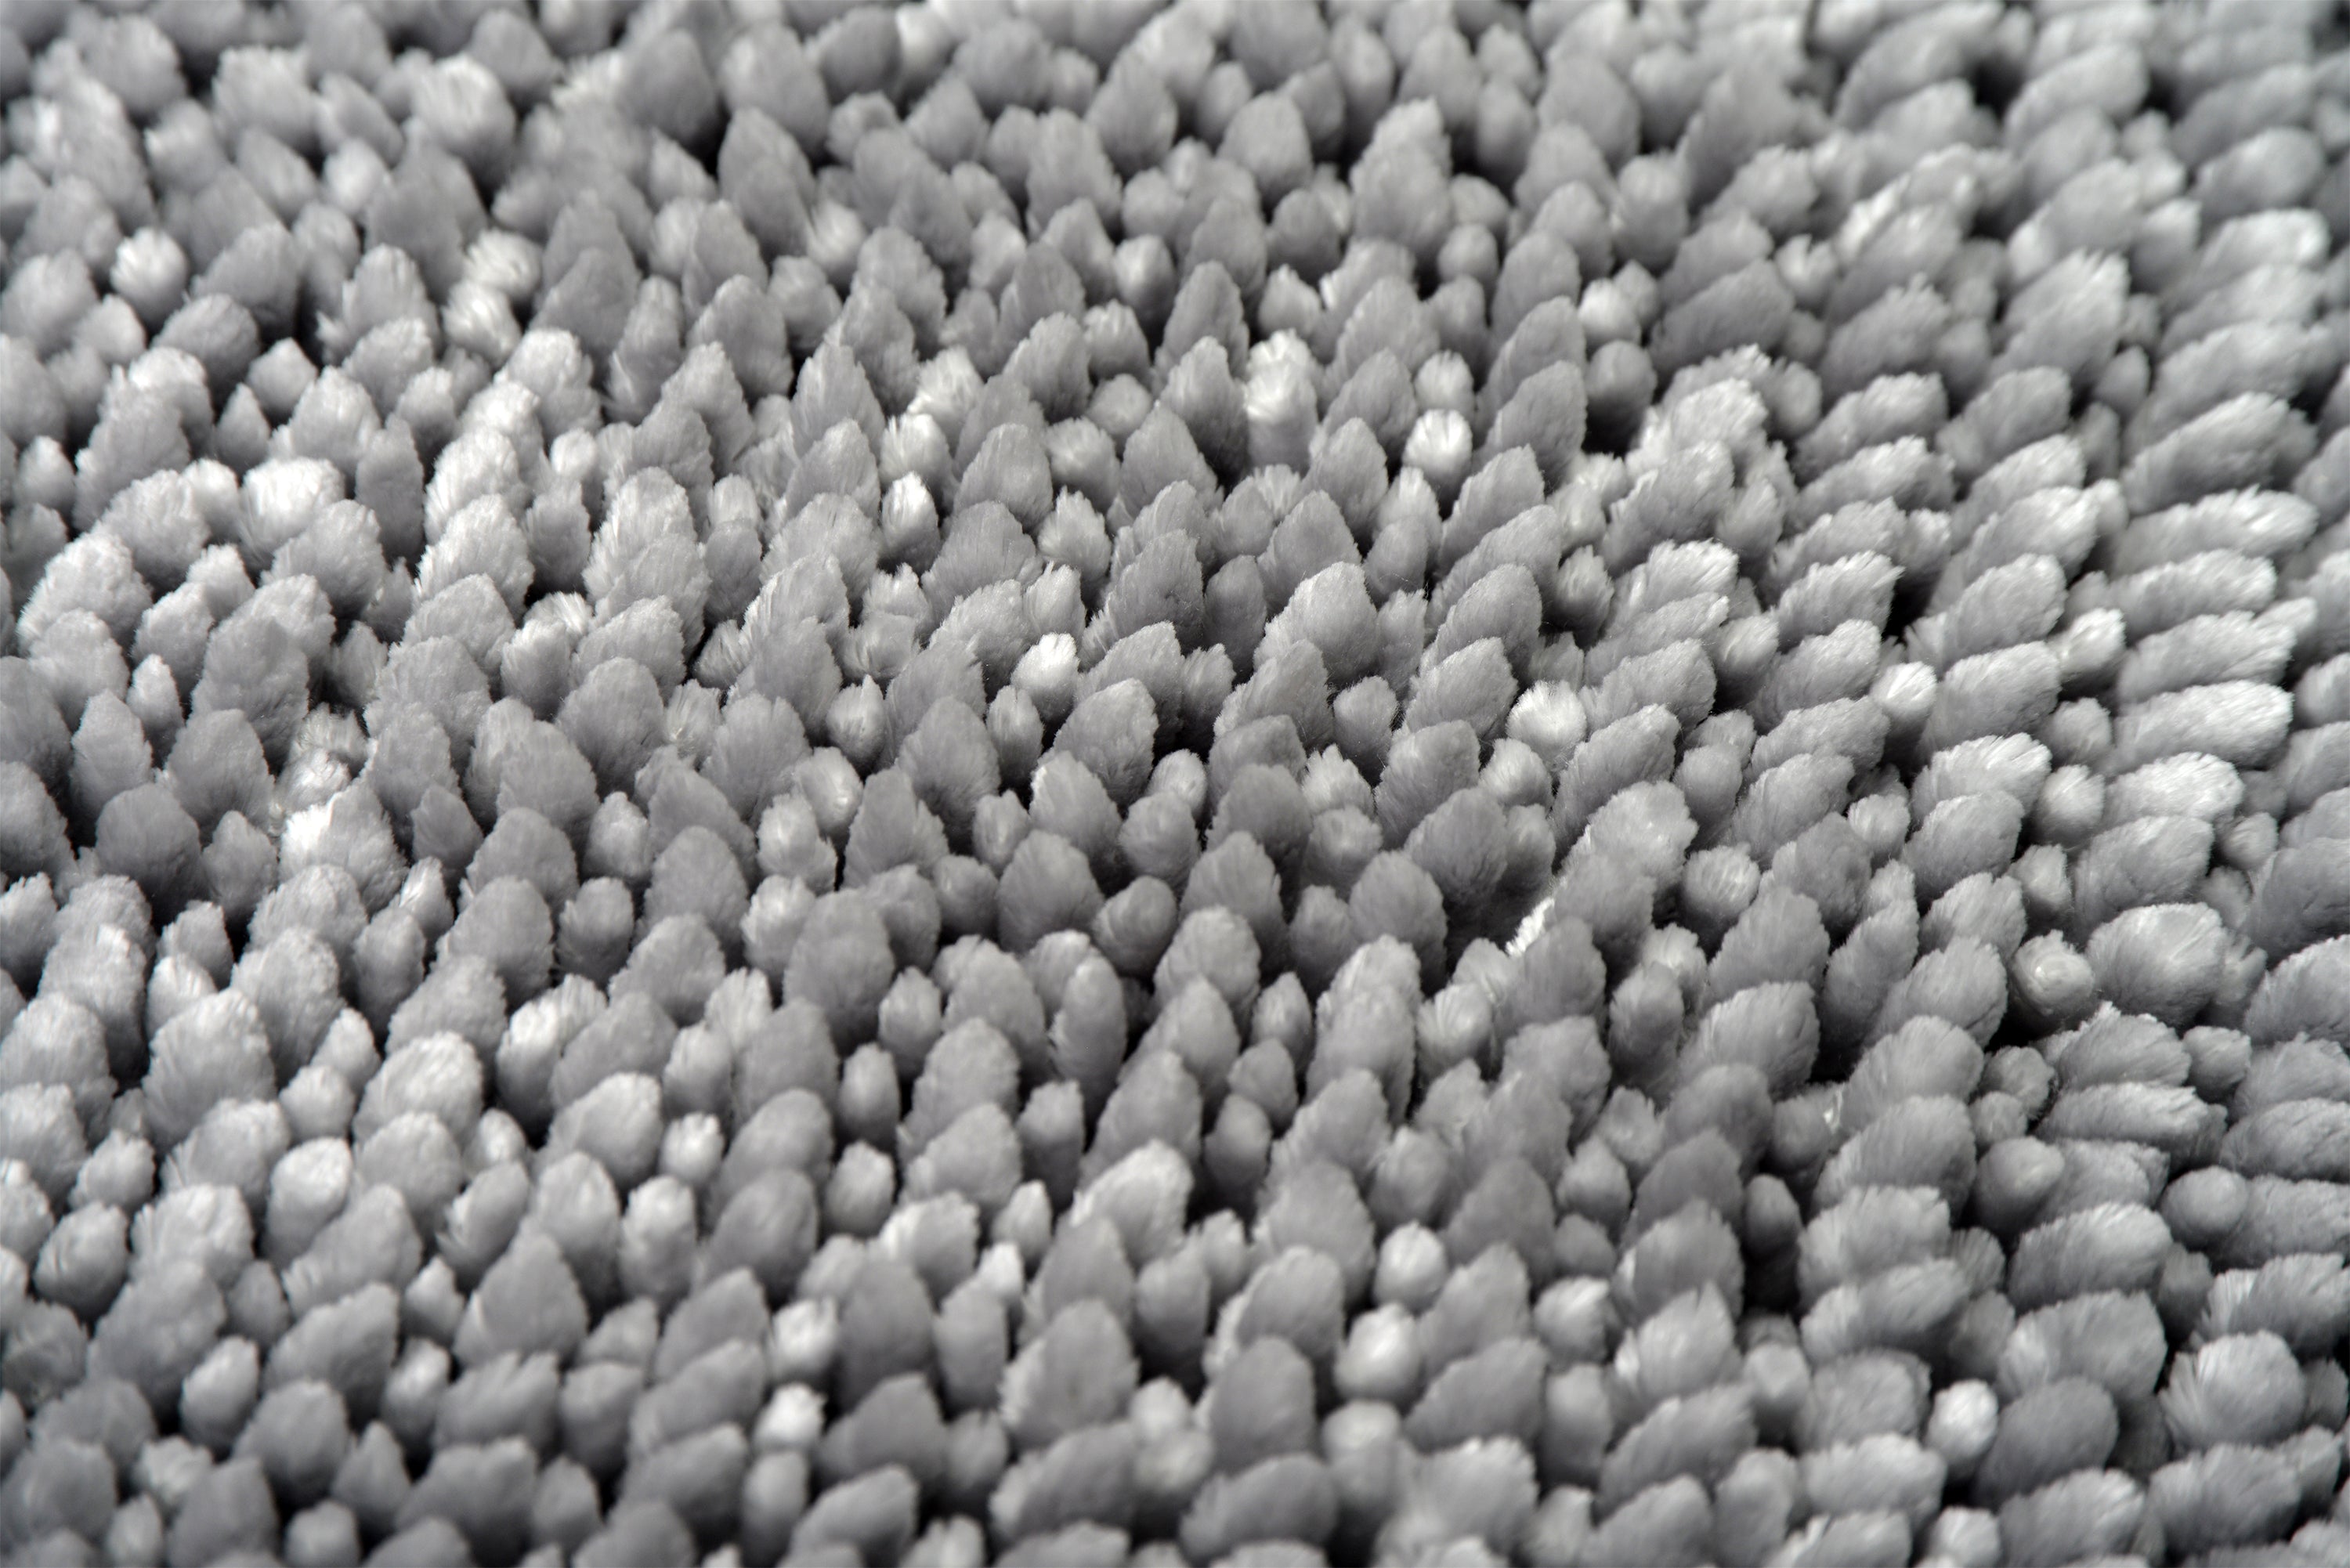 A close up of a light grey bobble bath mat